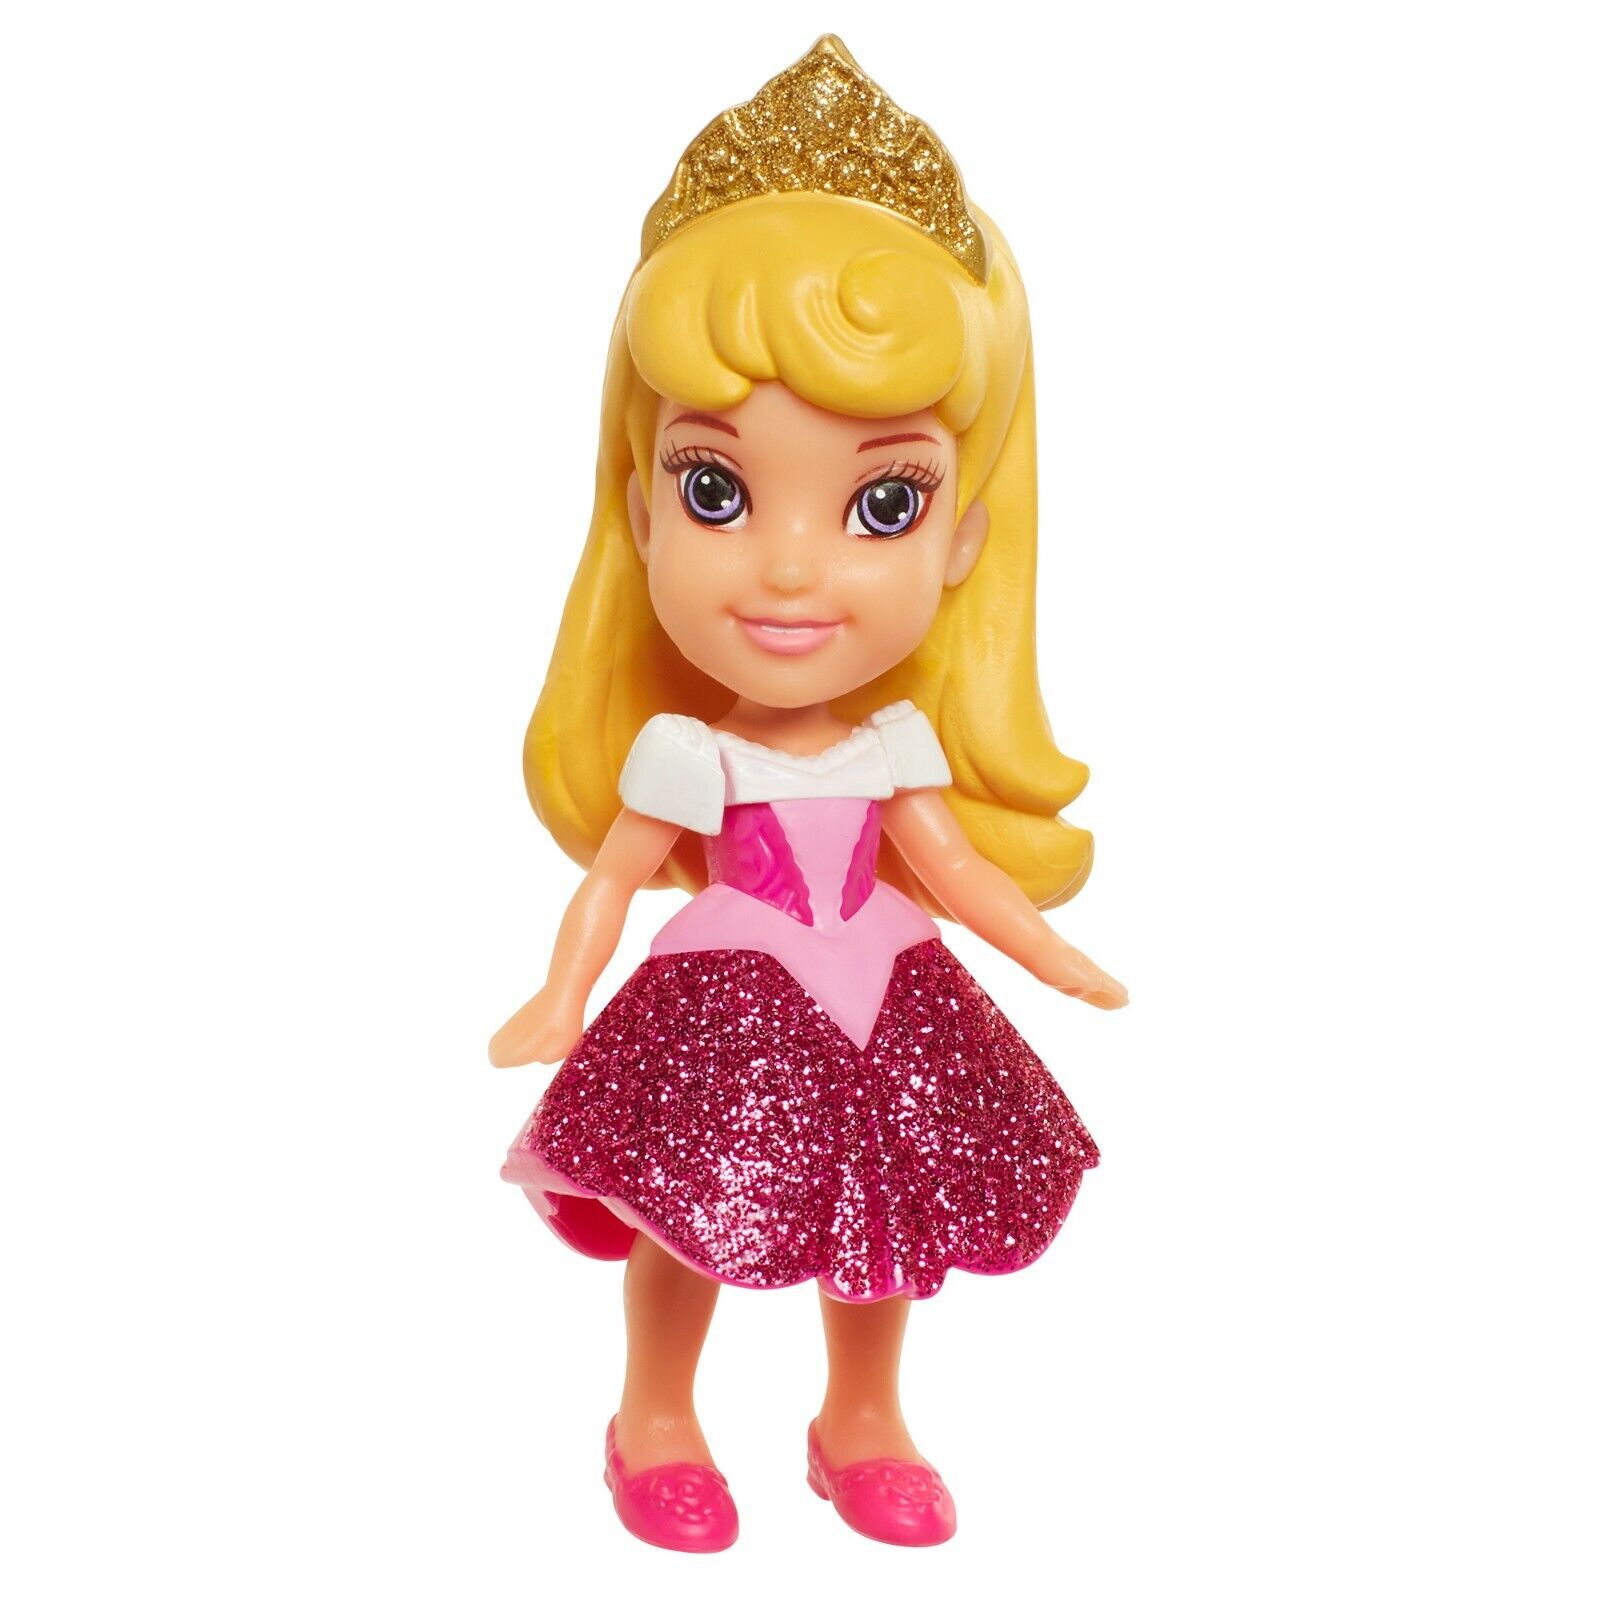 Disney Mini 3-Inch Toddler Dolls - Pick Your Favorite! - Aurora (Pink Glitter Dress)